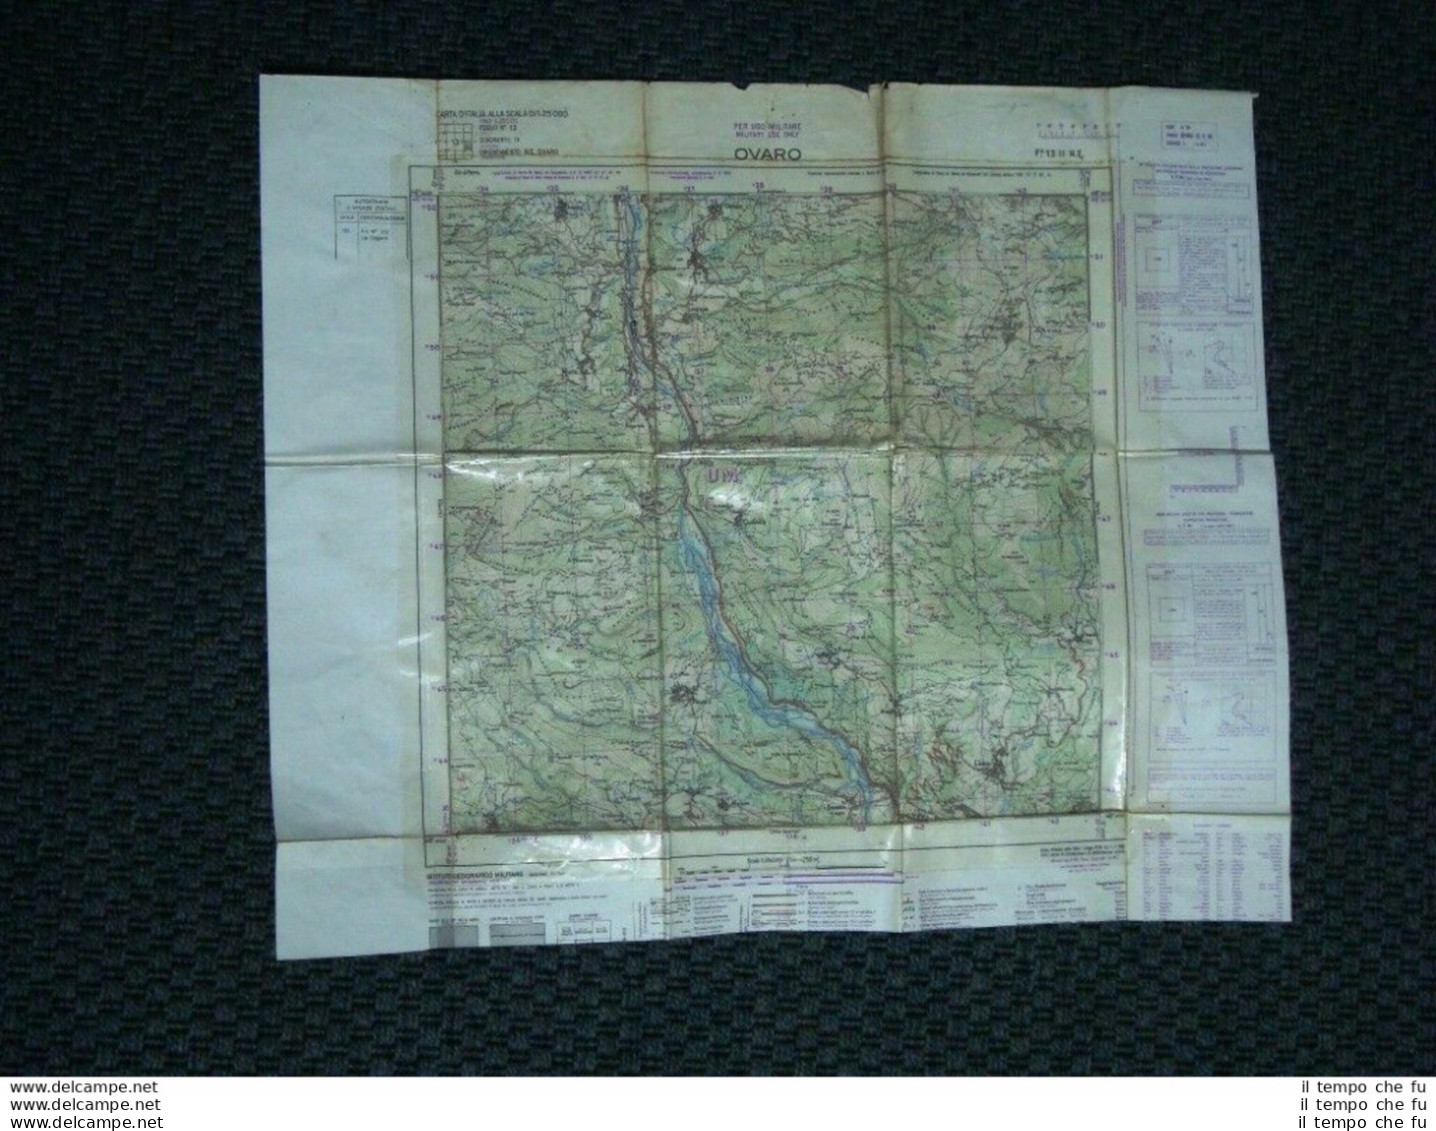 Grande Carta Topografica Ovaro O Davar Udine Friuli Dettagliatissima I.G.M - Landkarten